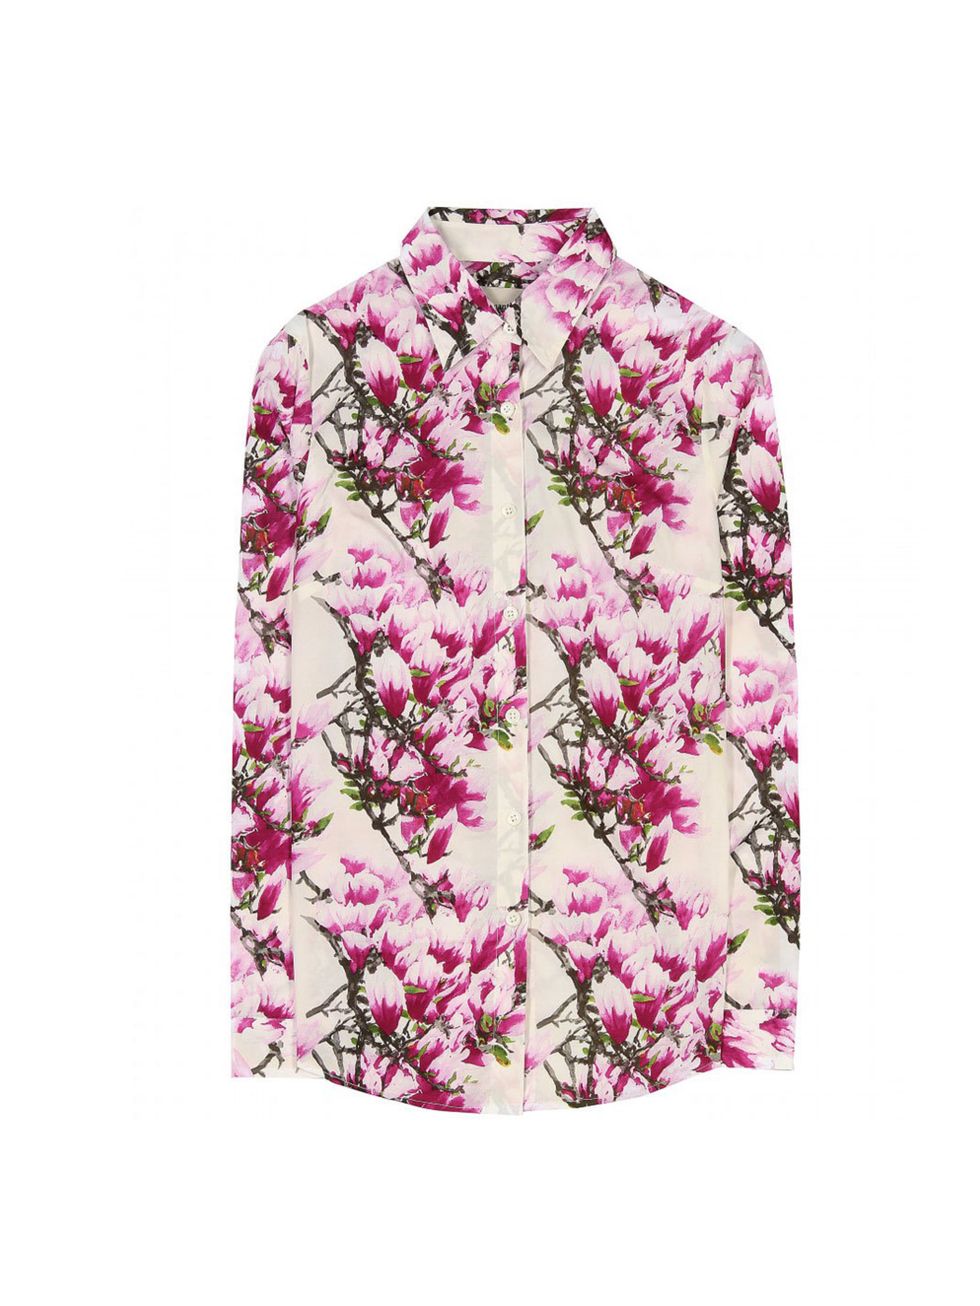 <p>Samantha Sung pink floral shirt, £269, at Mytheresa</p><p><a href="http://shopping.elleuk.com/browse?fts=samantha+sung+floral+blouse">BUY NOW</a></p>